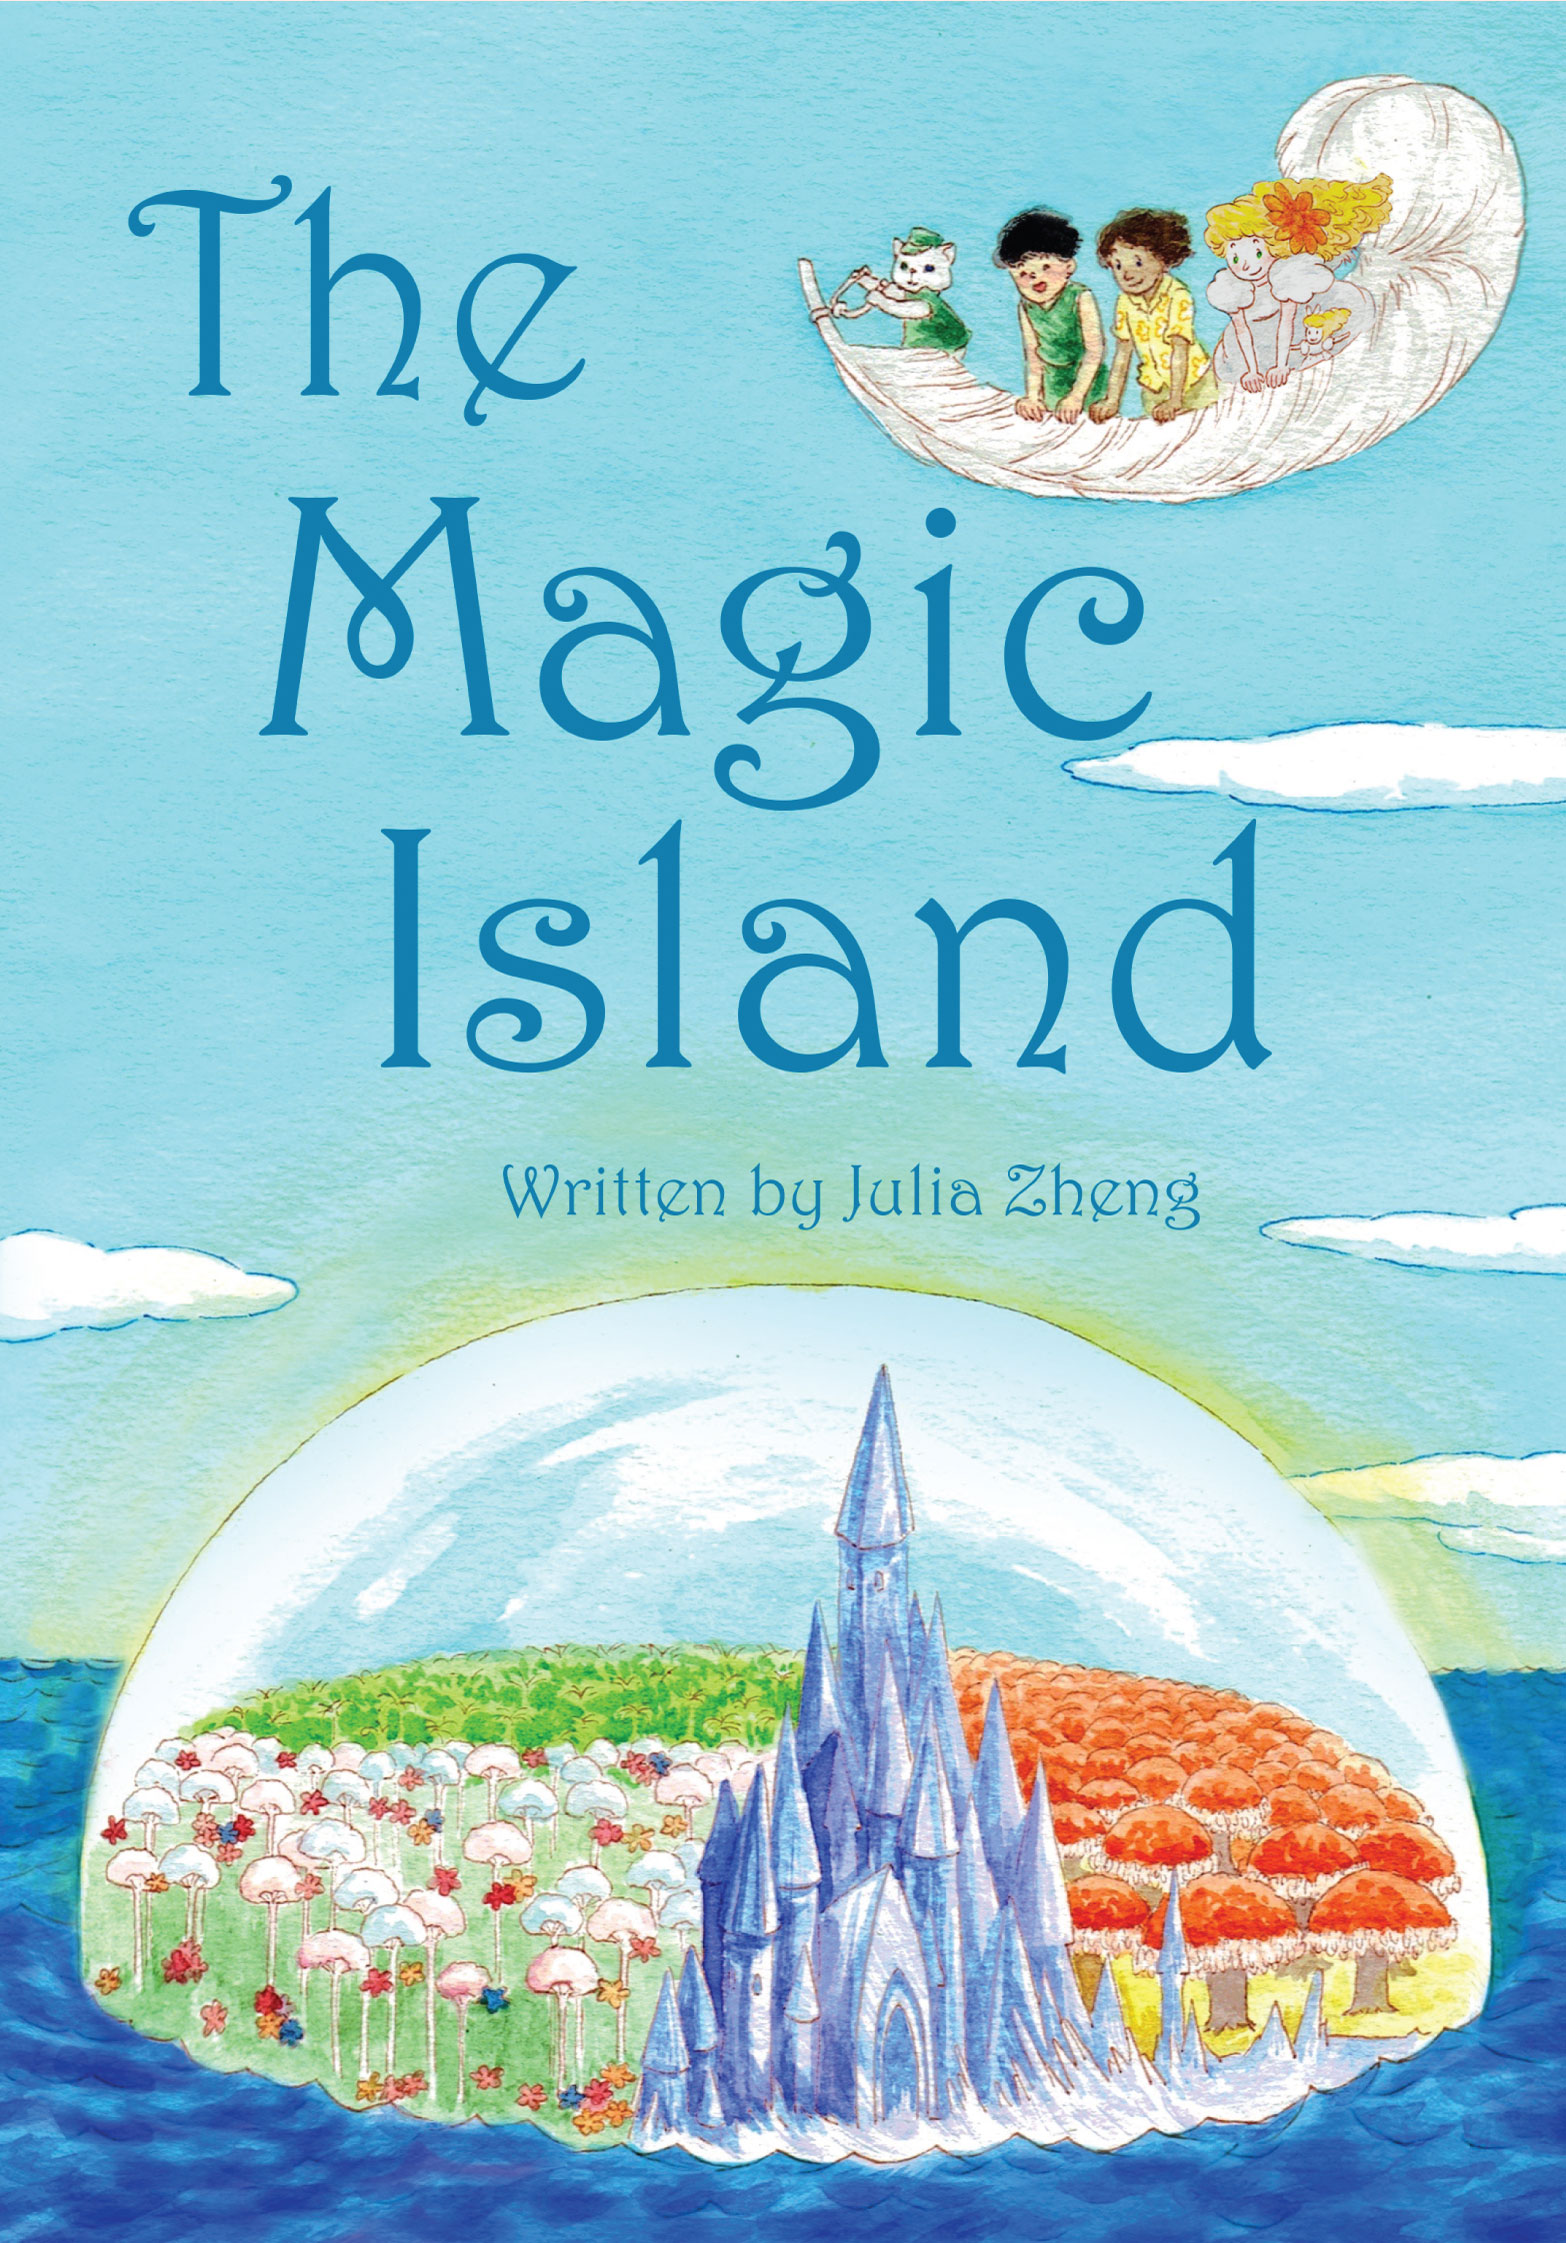 FREE: The Magic Island by Julia Zheng